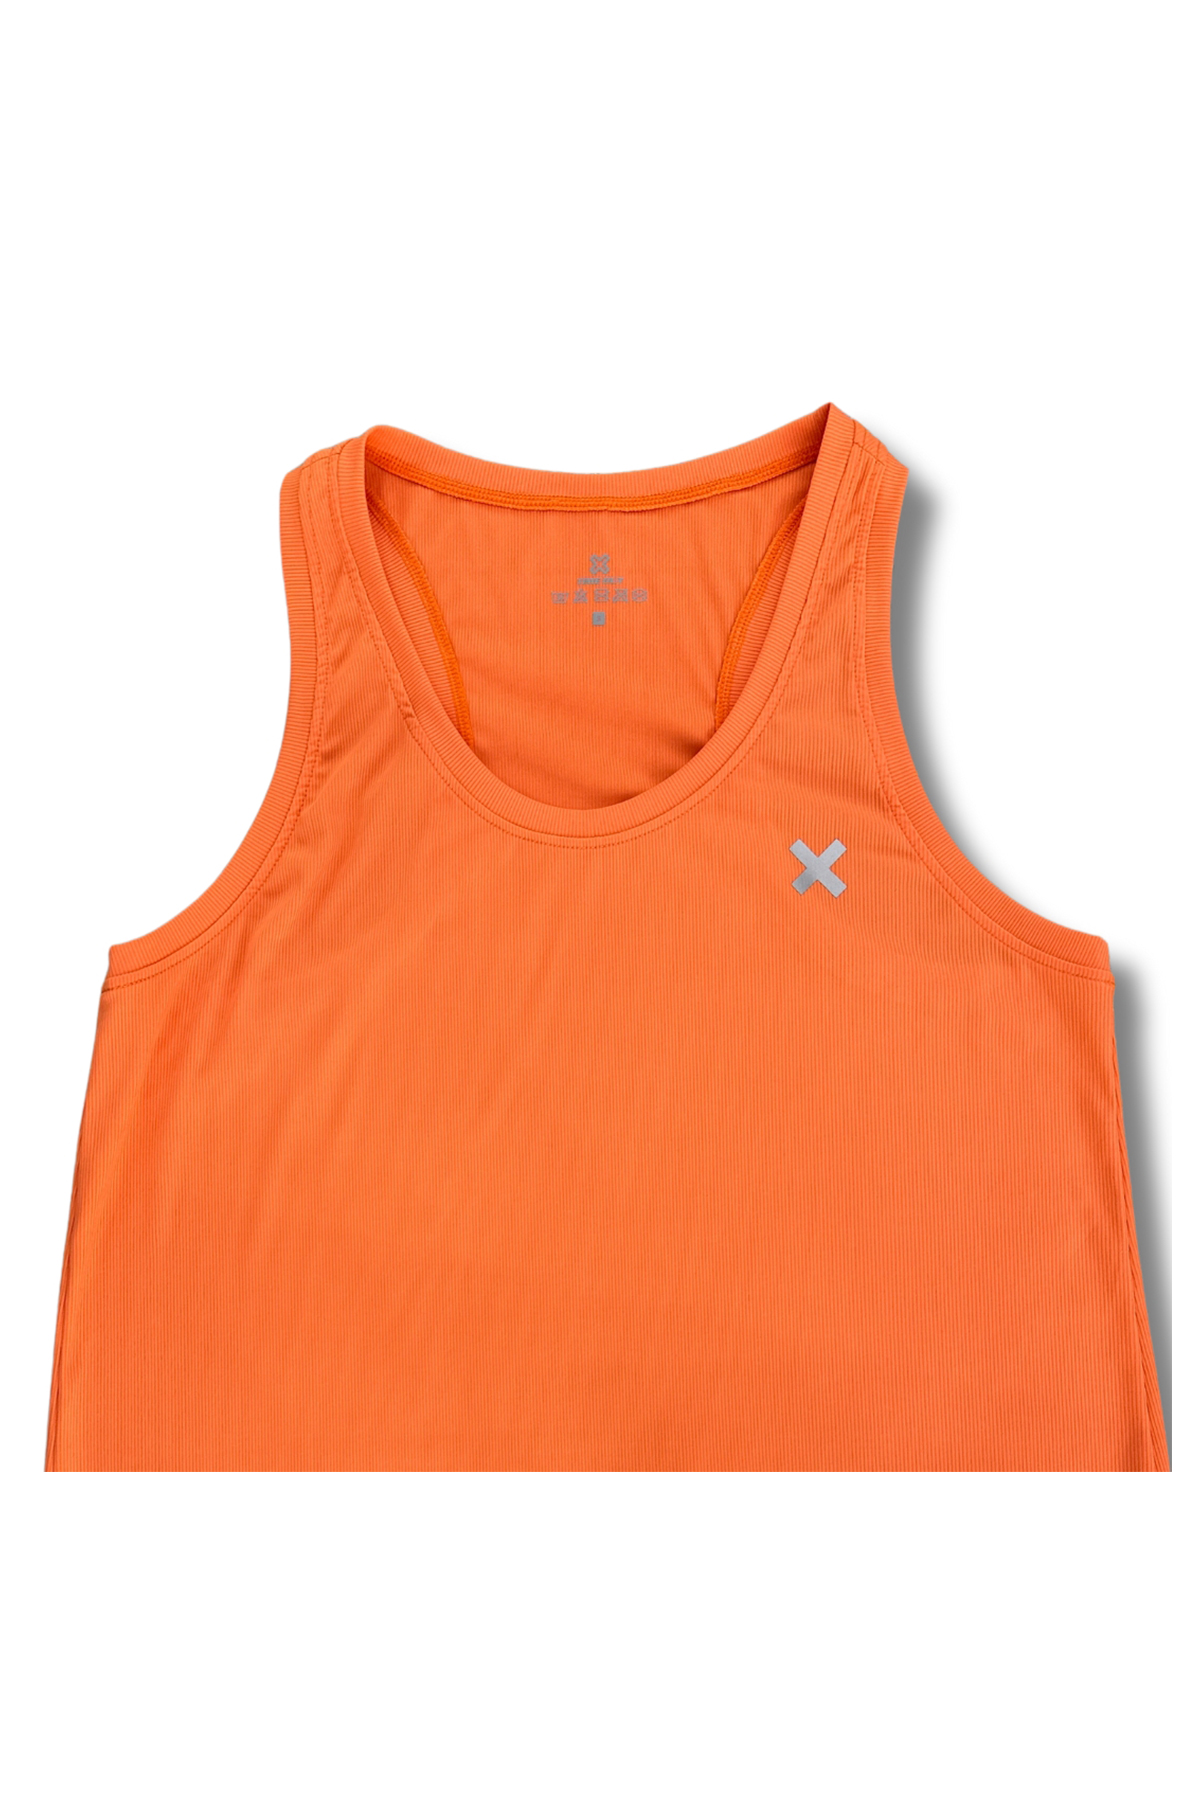 Pro-Fitness-Tank-Top-for-Women-orange-front-zoom